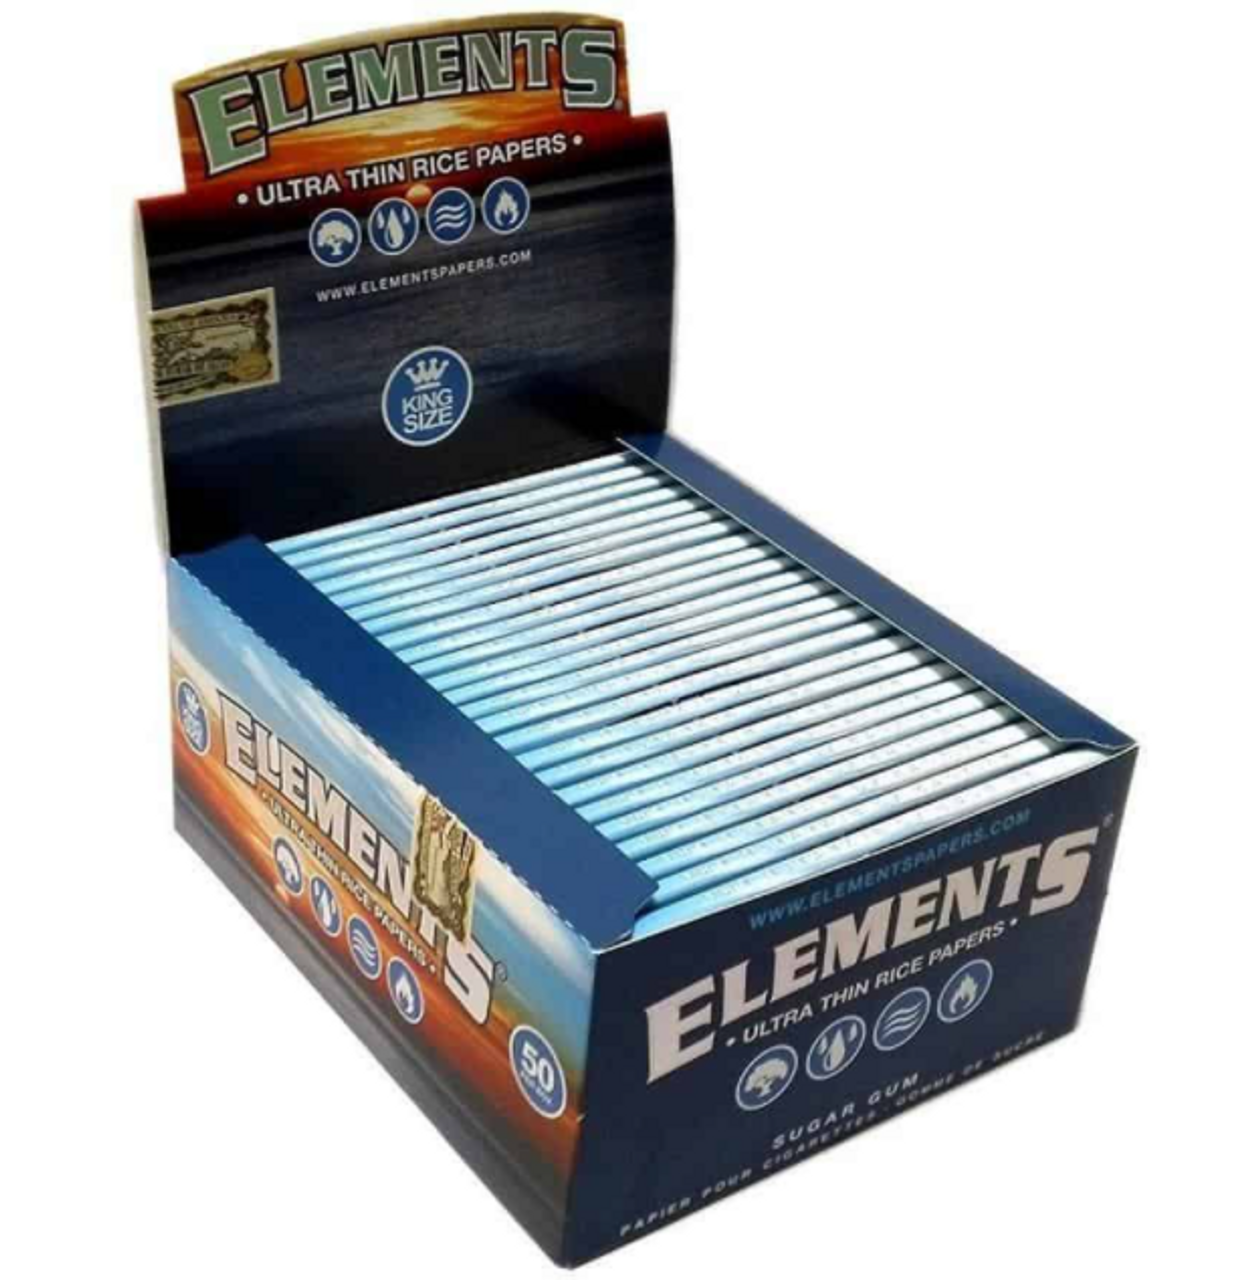 Elements Cigarette Rolling Papers Artesano King Size Slim 15Ct